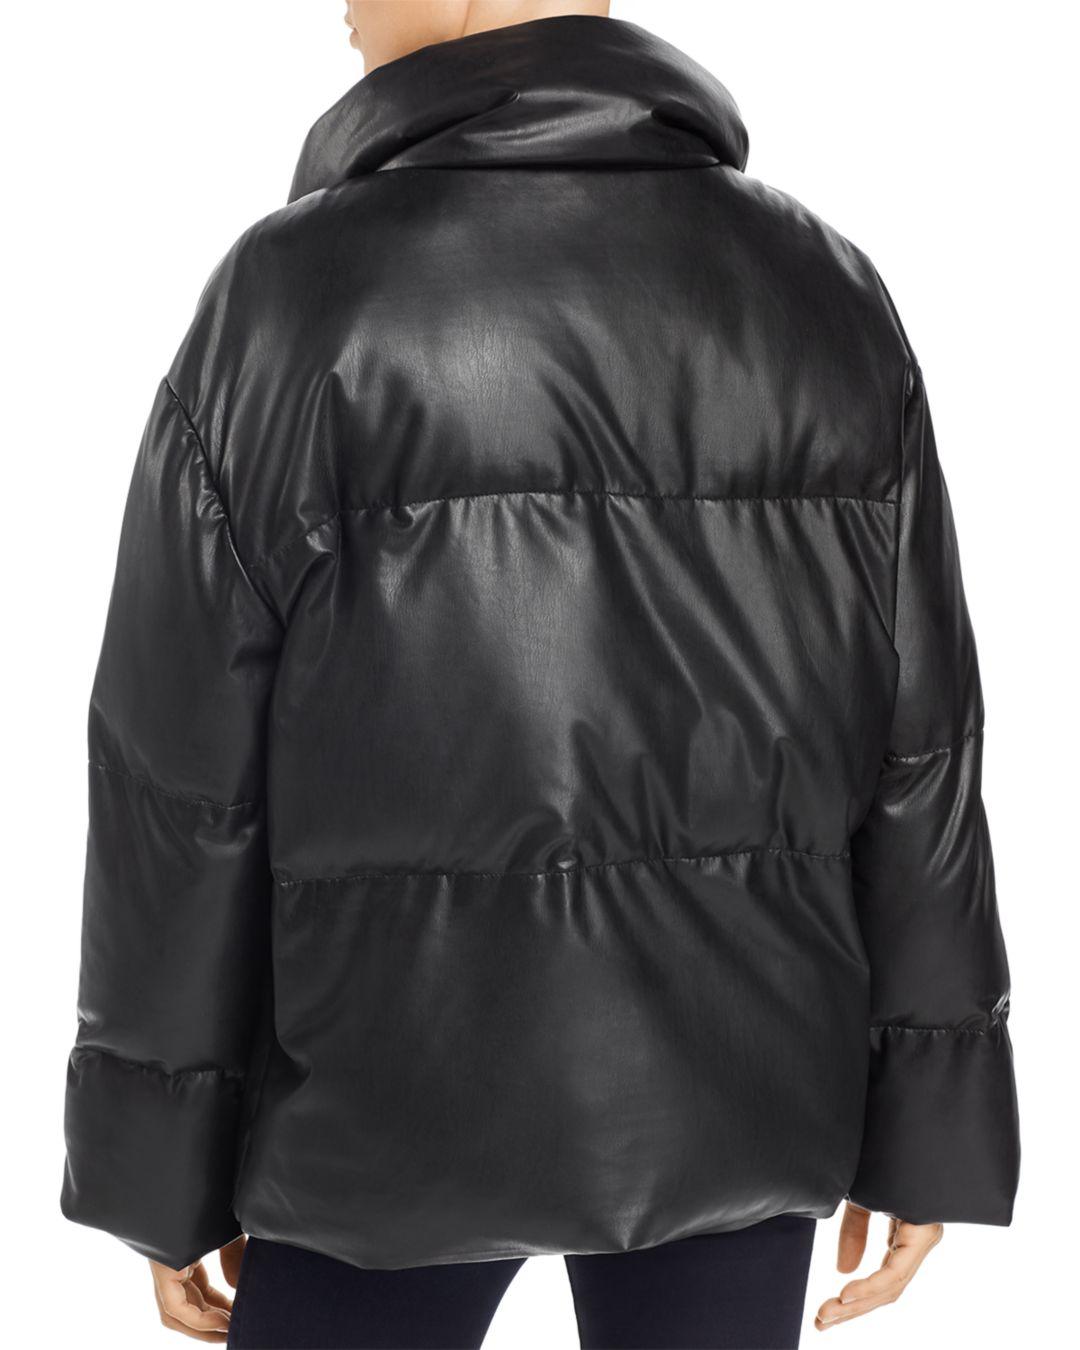 Bagatelle Oversize Faux Leather Puffer Jacket in Black - Lyst